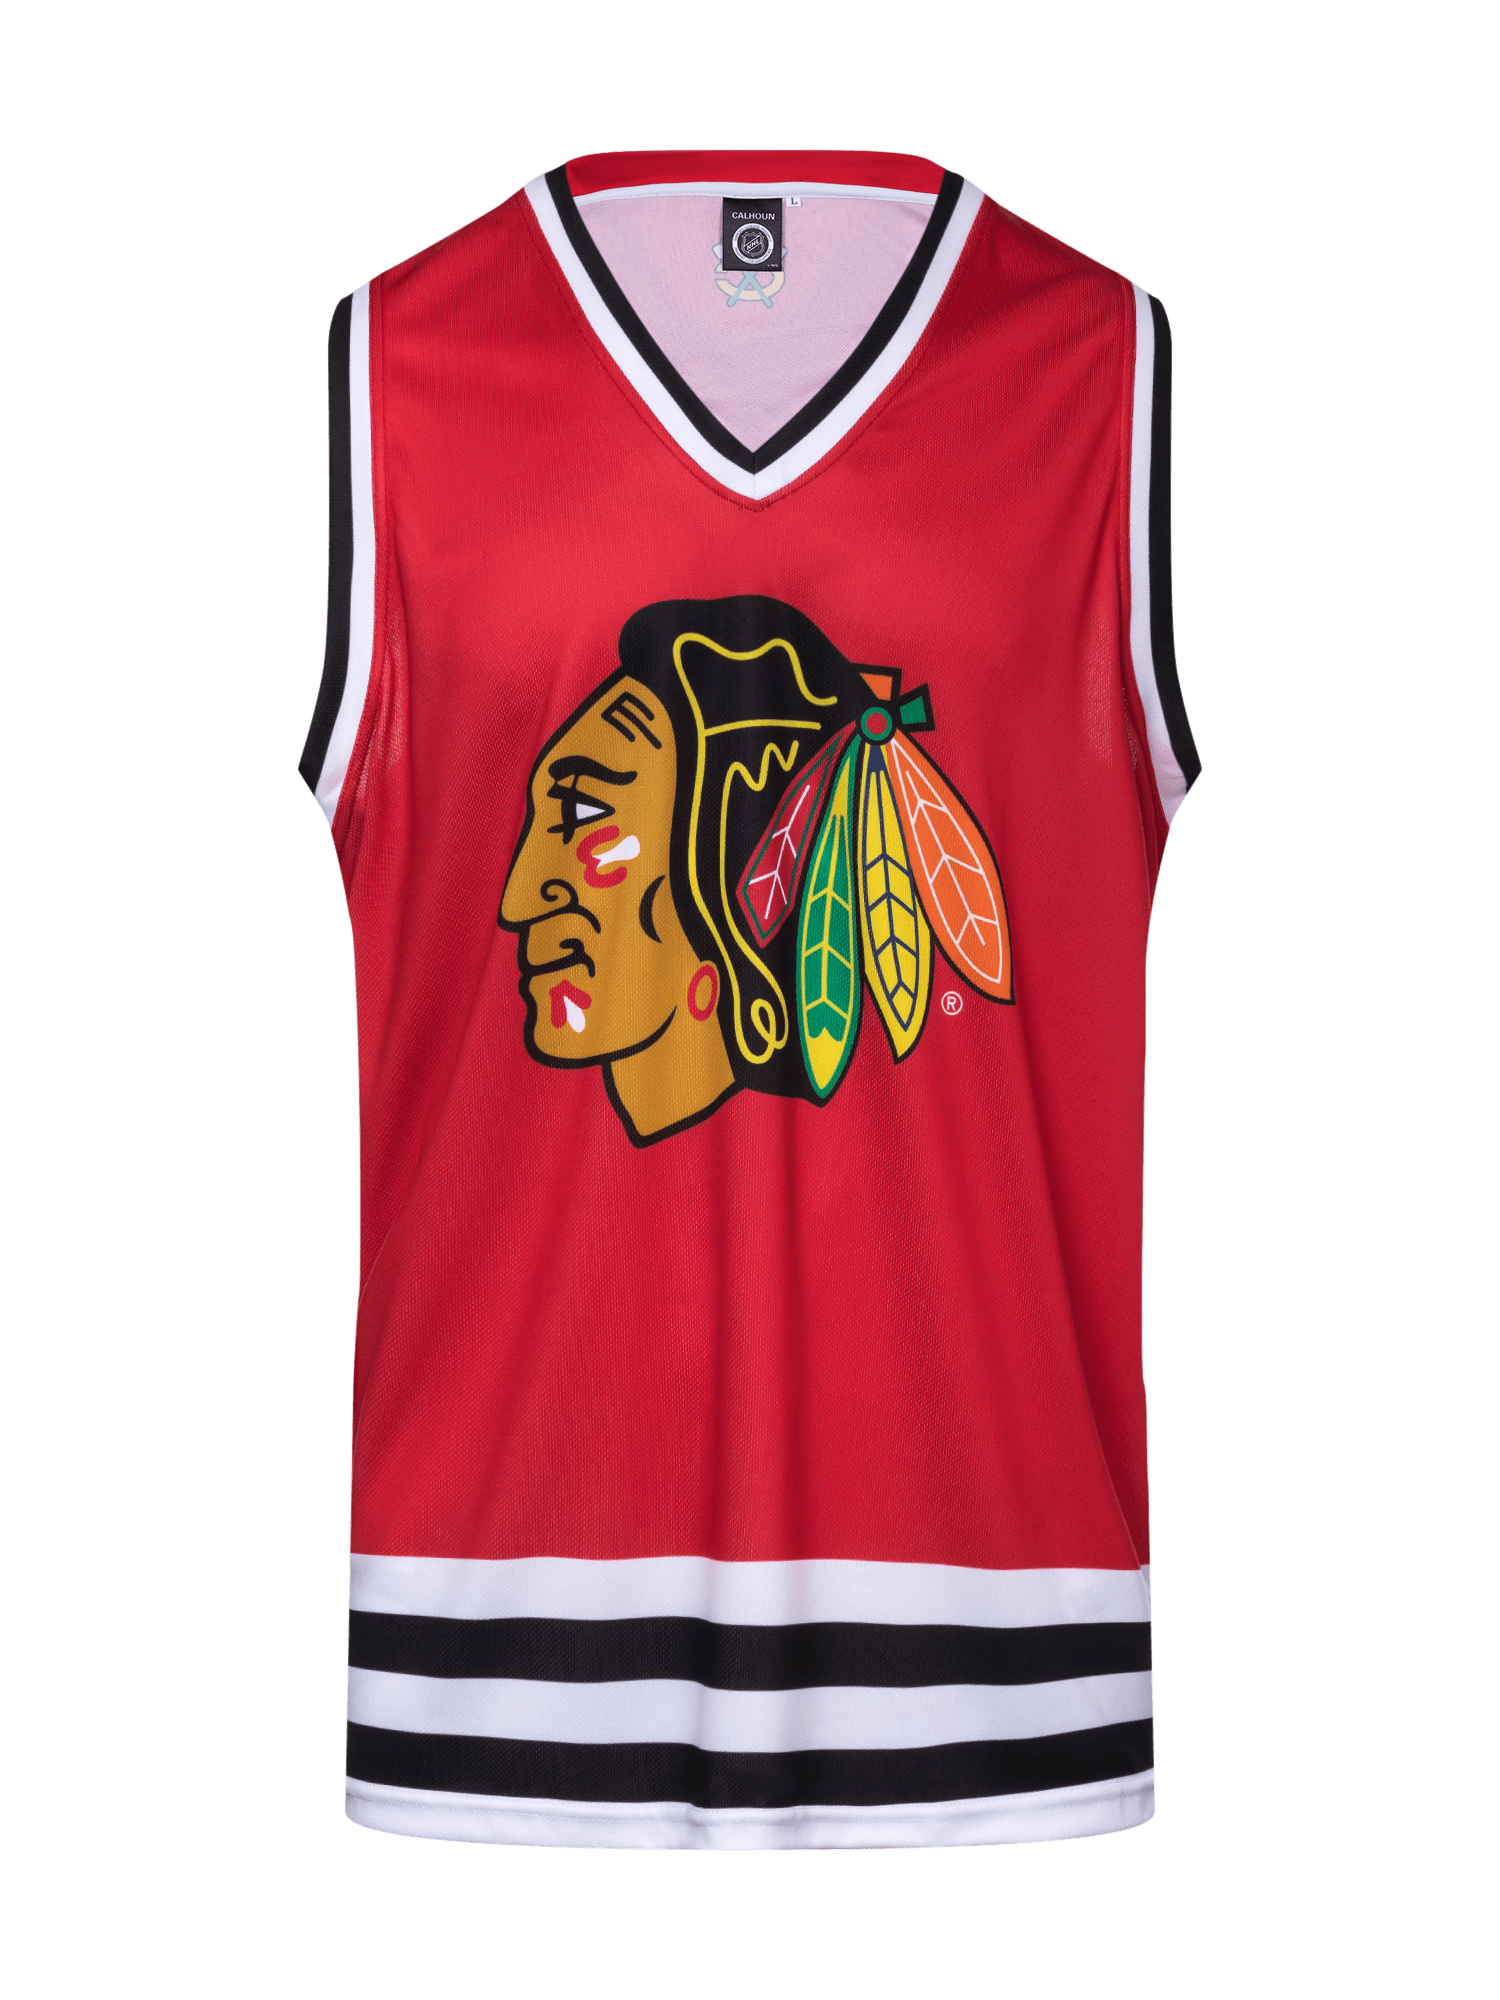 Chicago Blackhawks - Concept Jersey Set : r/hawks